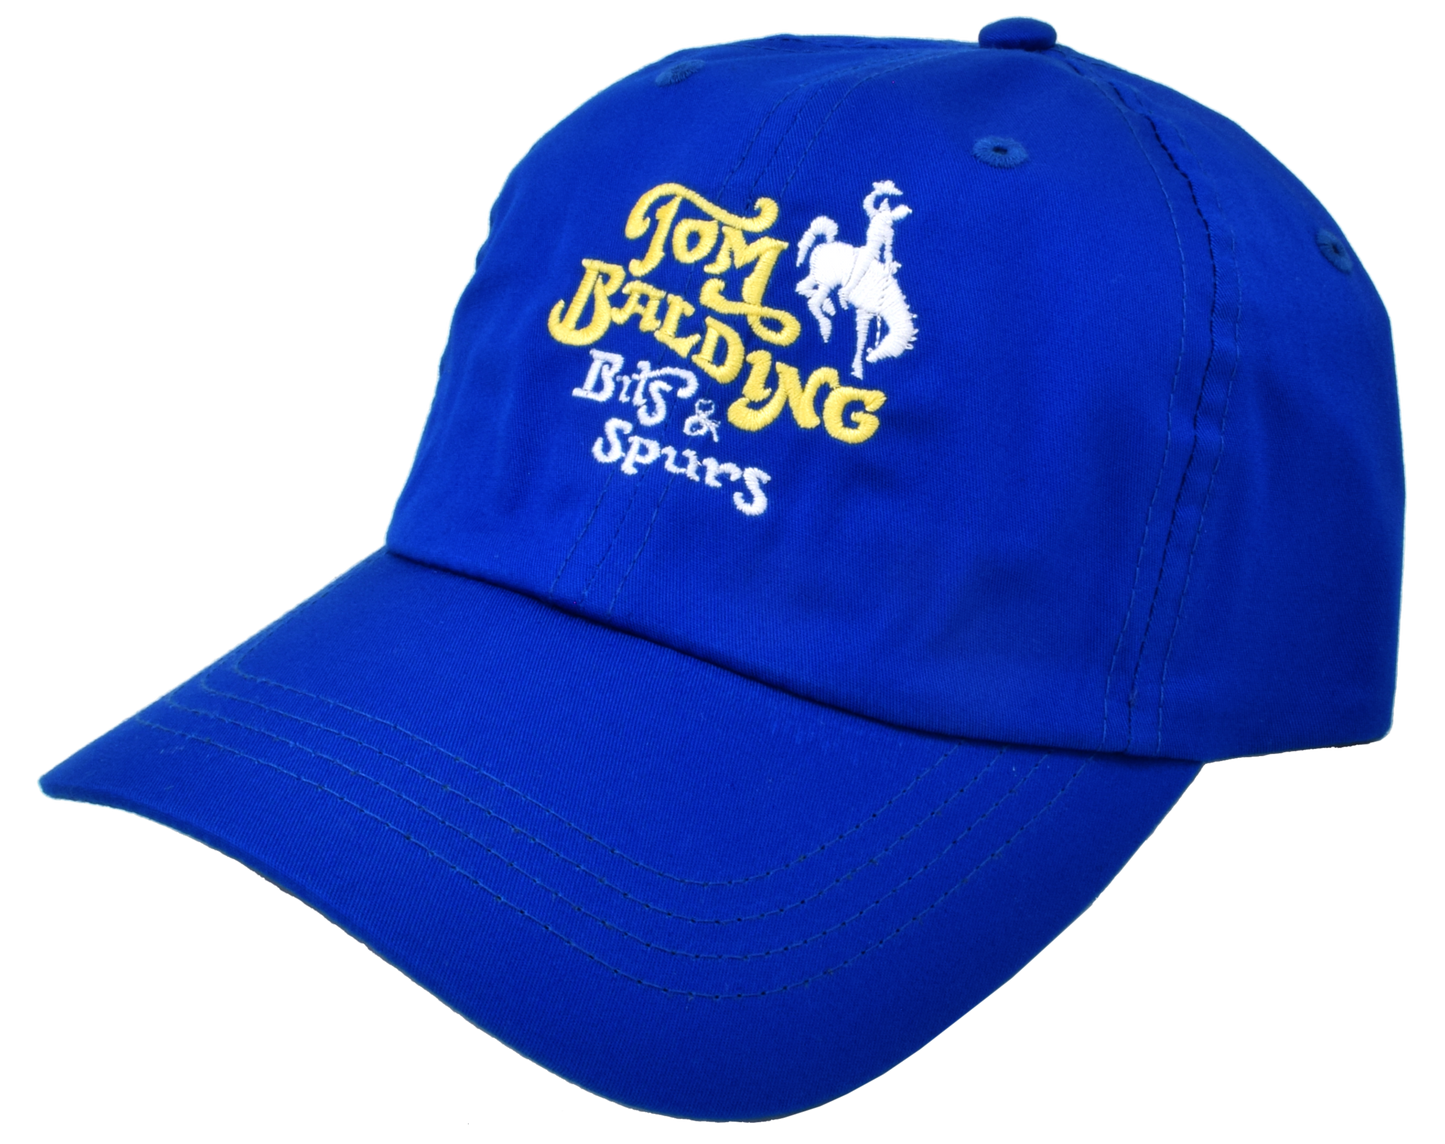 Gorra #42 Imperial Royal Blue Cap de Tom Balding Bits & Spurs